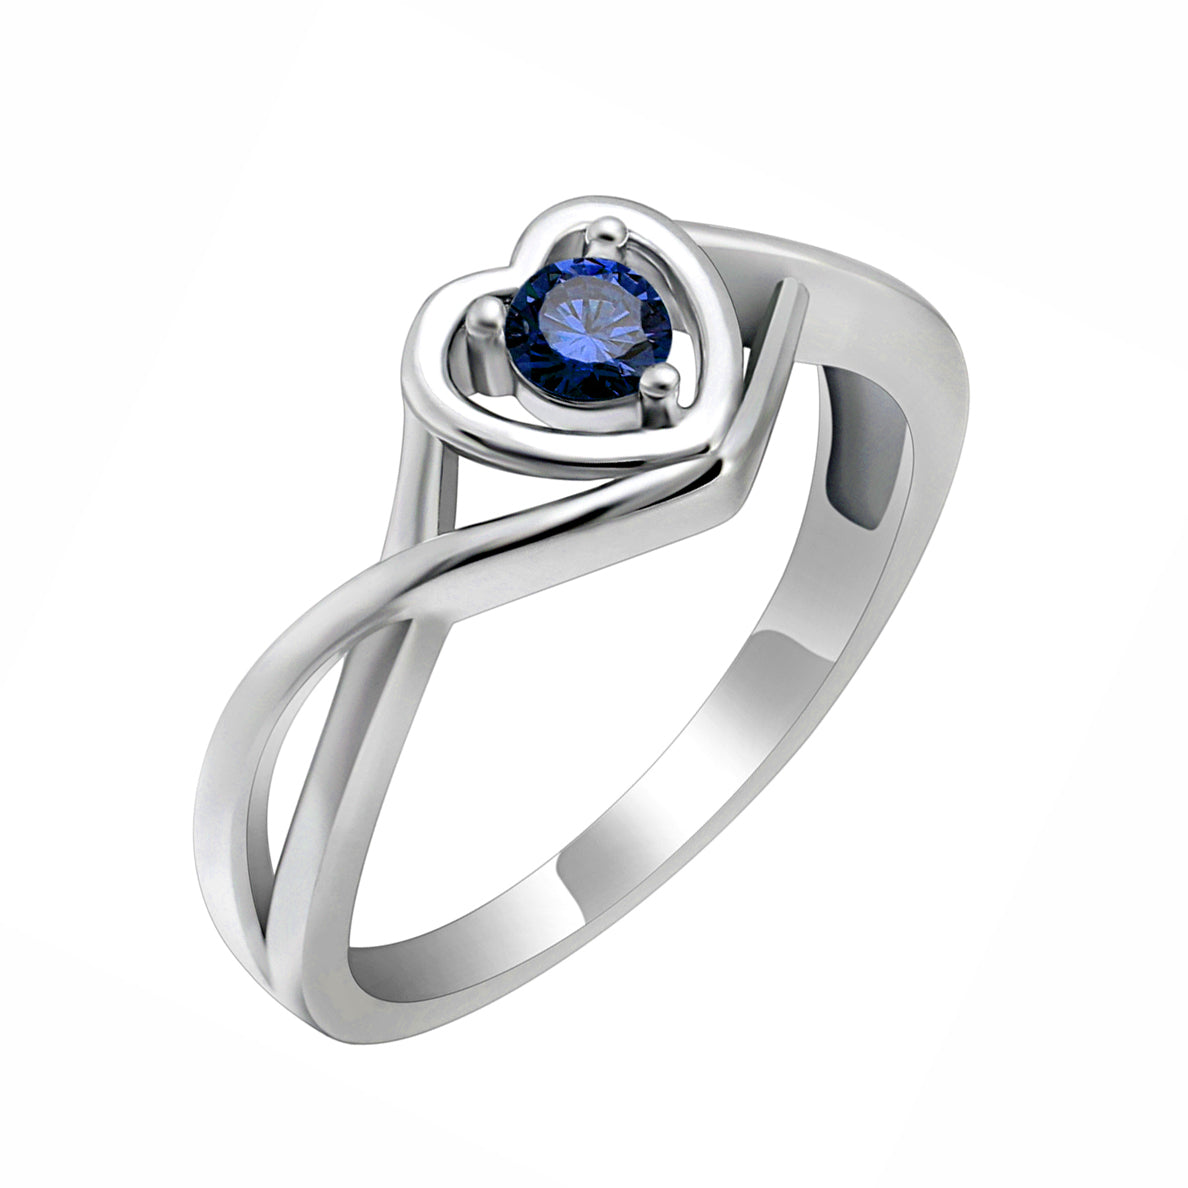 Christine Engagement Ring Promise Heart For Women Silver Cz Ginger Lyne Collection - September Blue,9